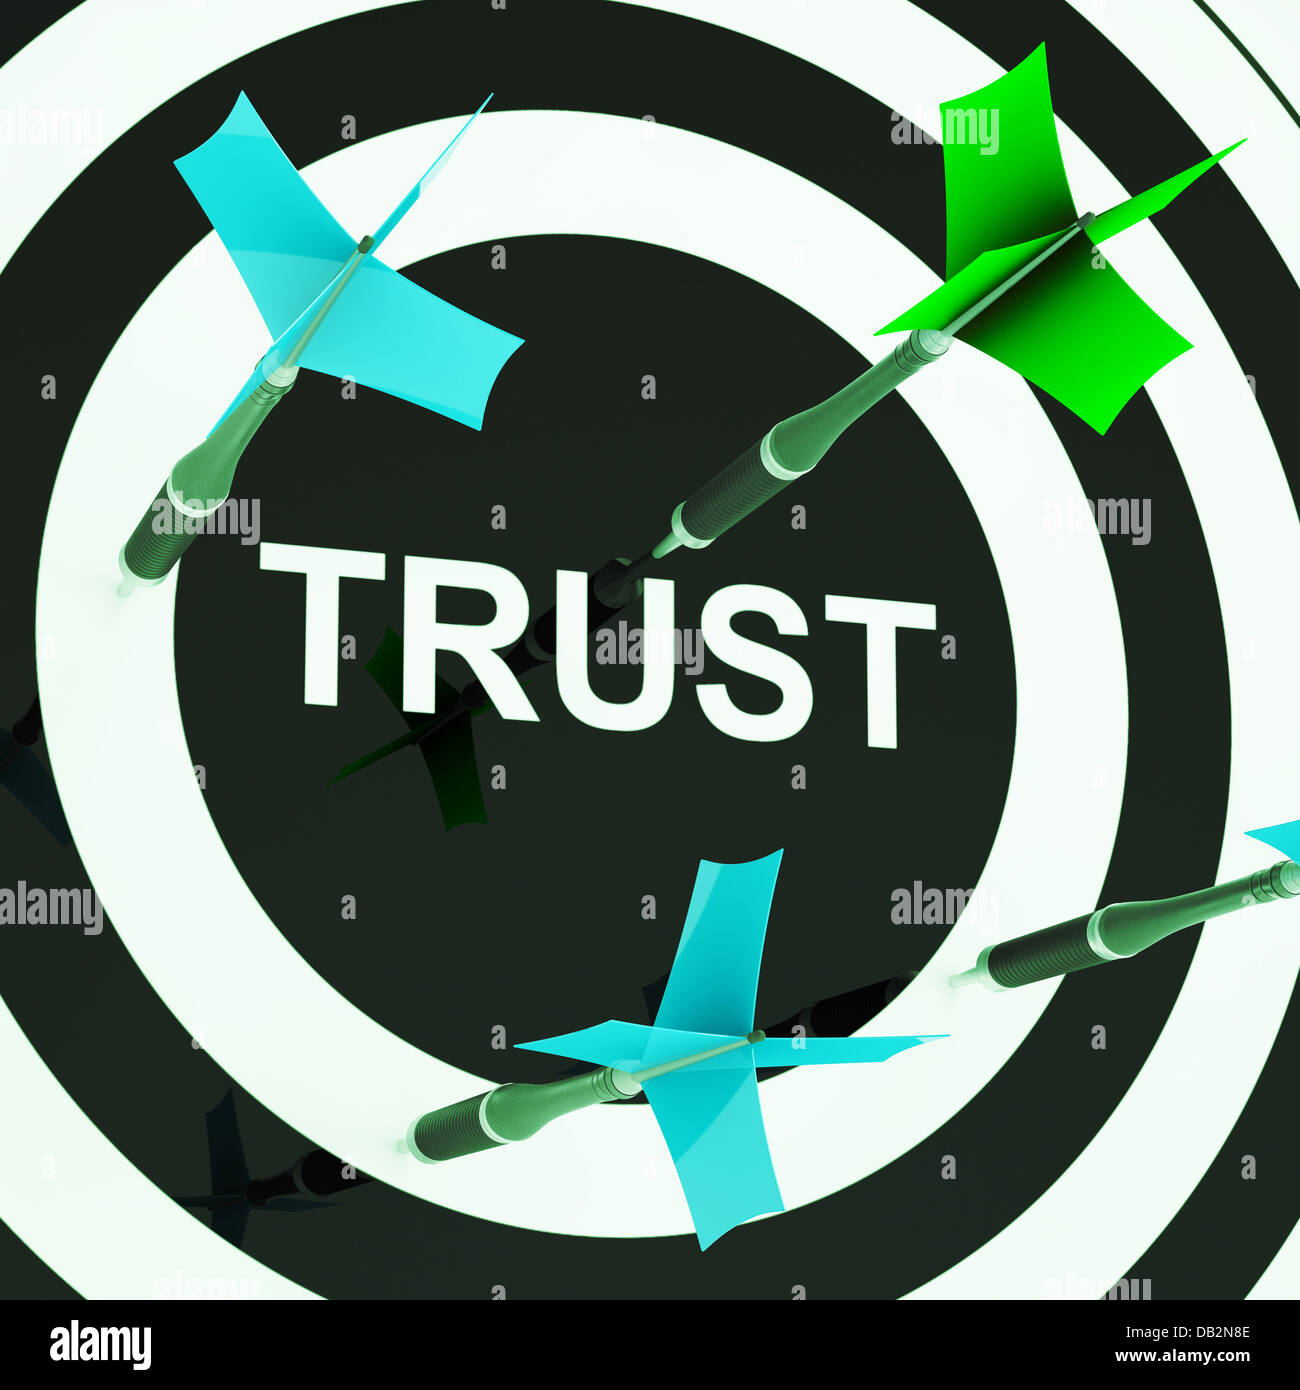 Trust On Dartboard Showing Mistrust Stock Photo